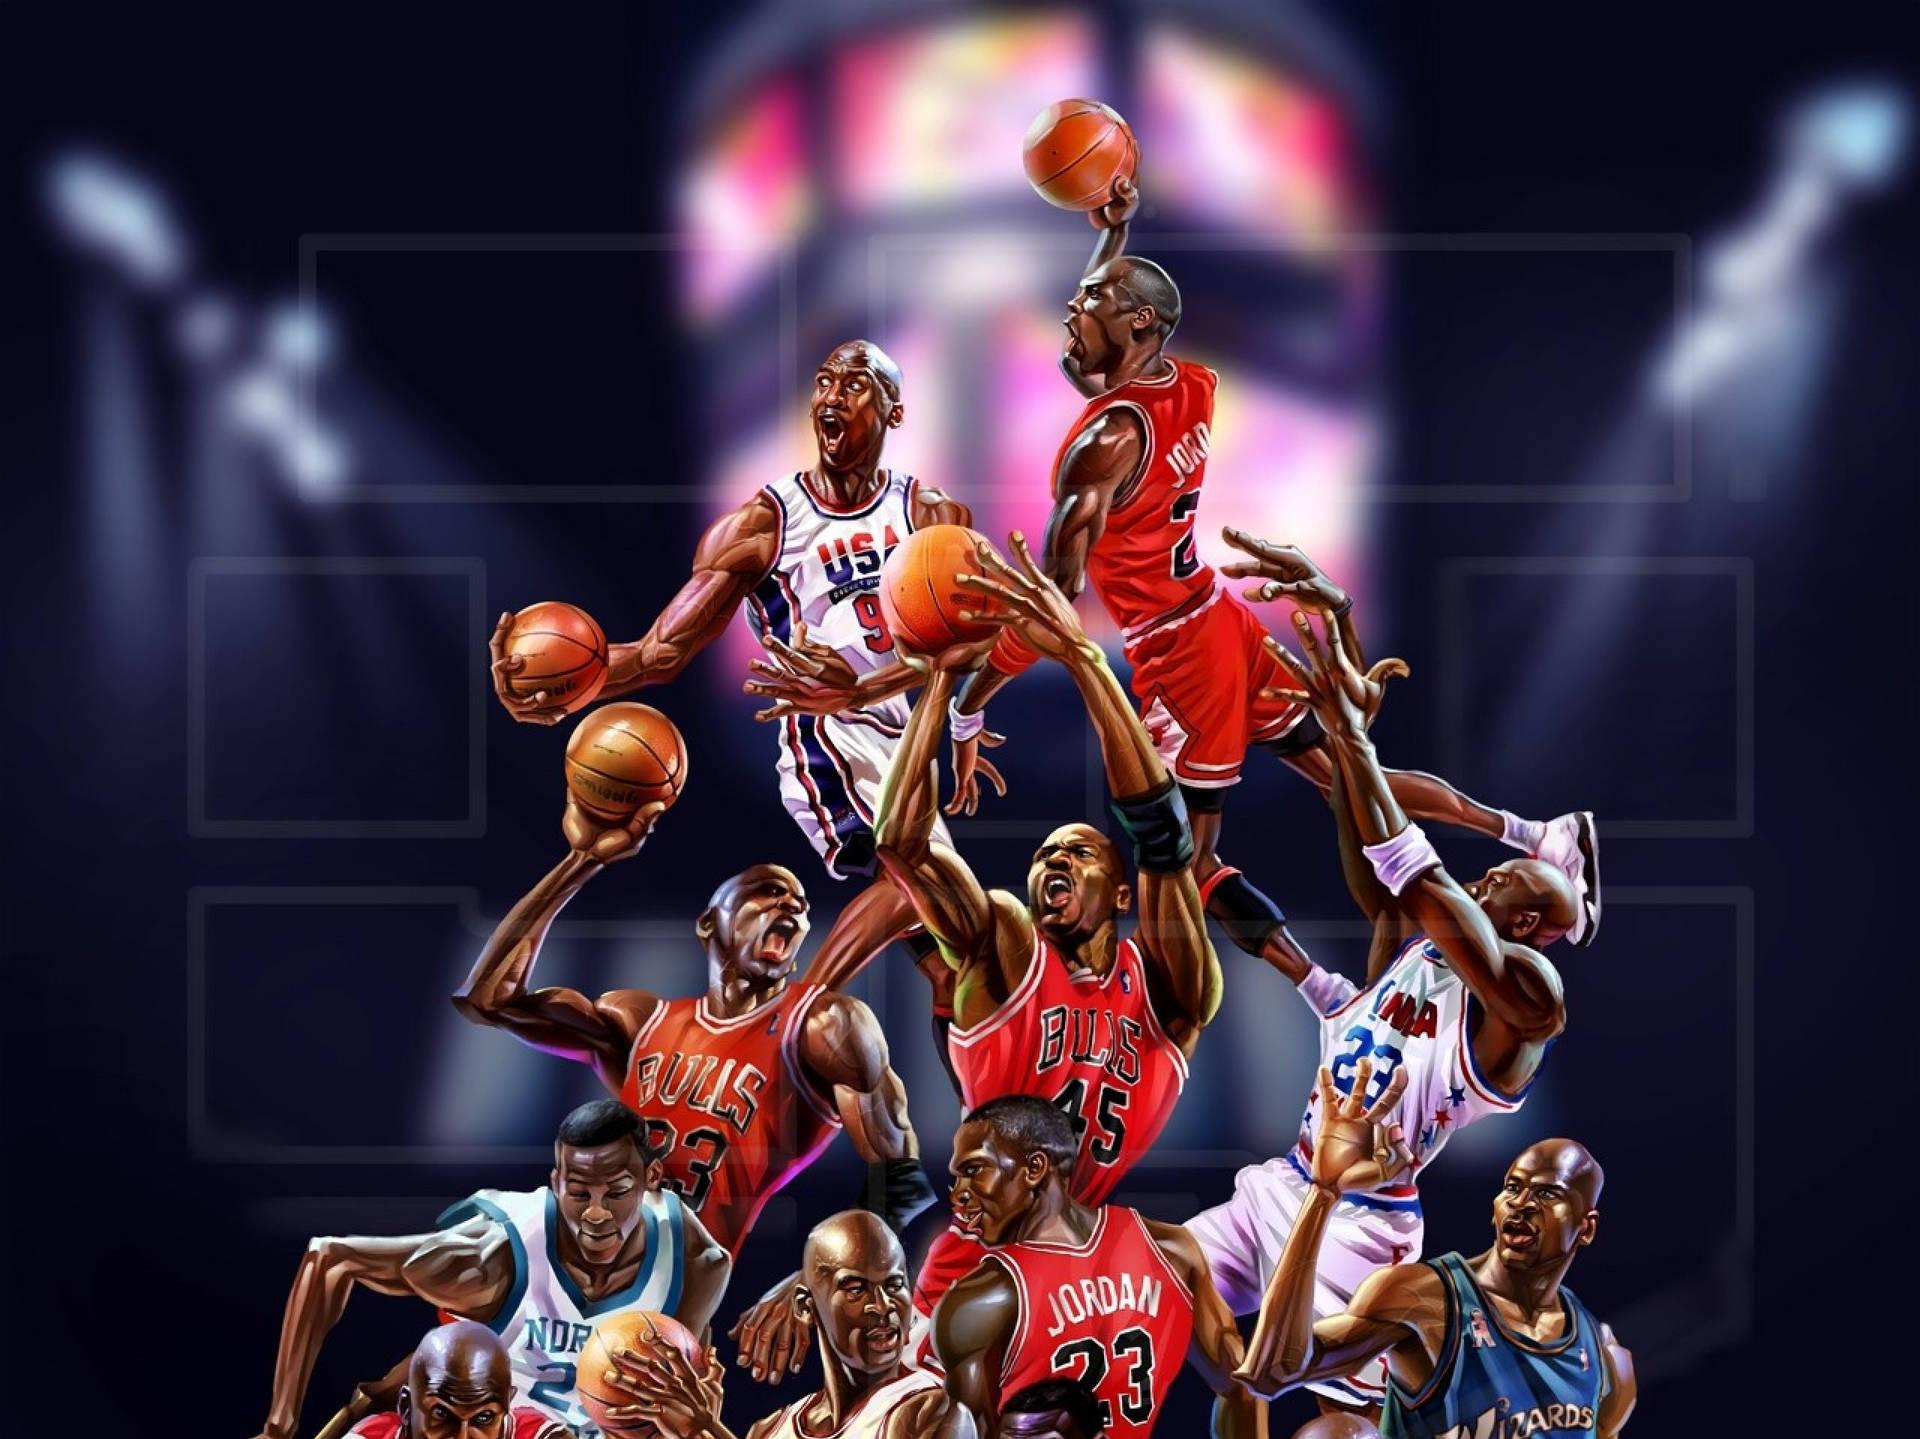 Michael Jordan Basketball Legend And Five Time Nba